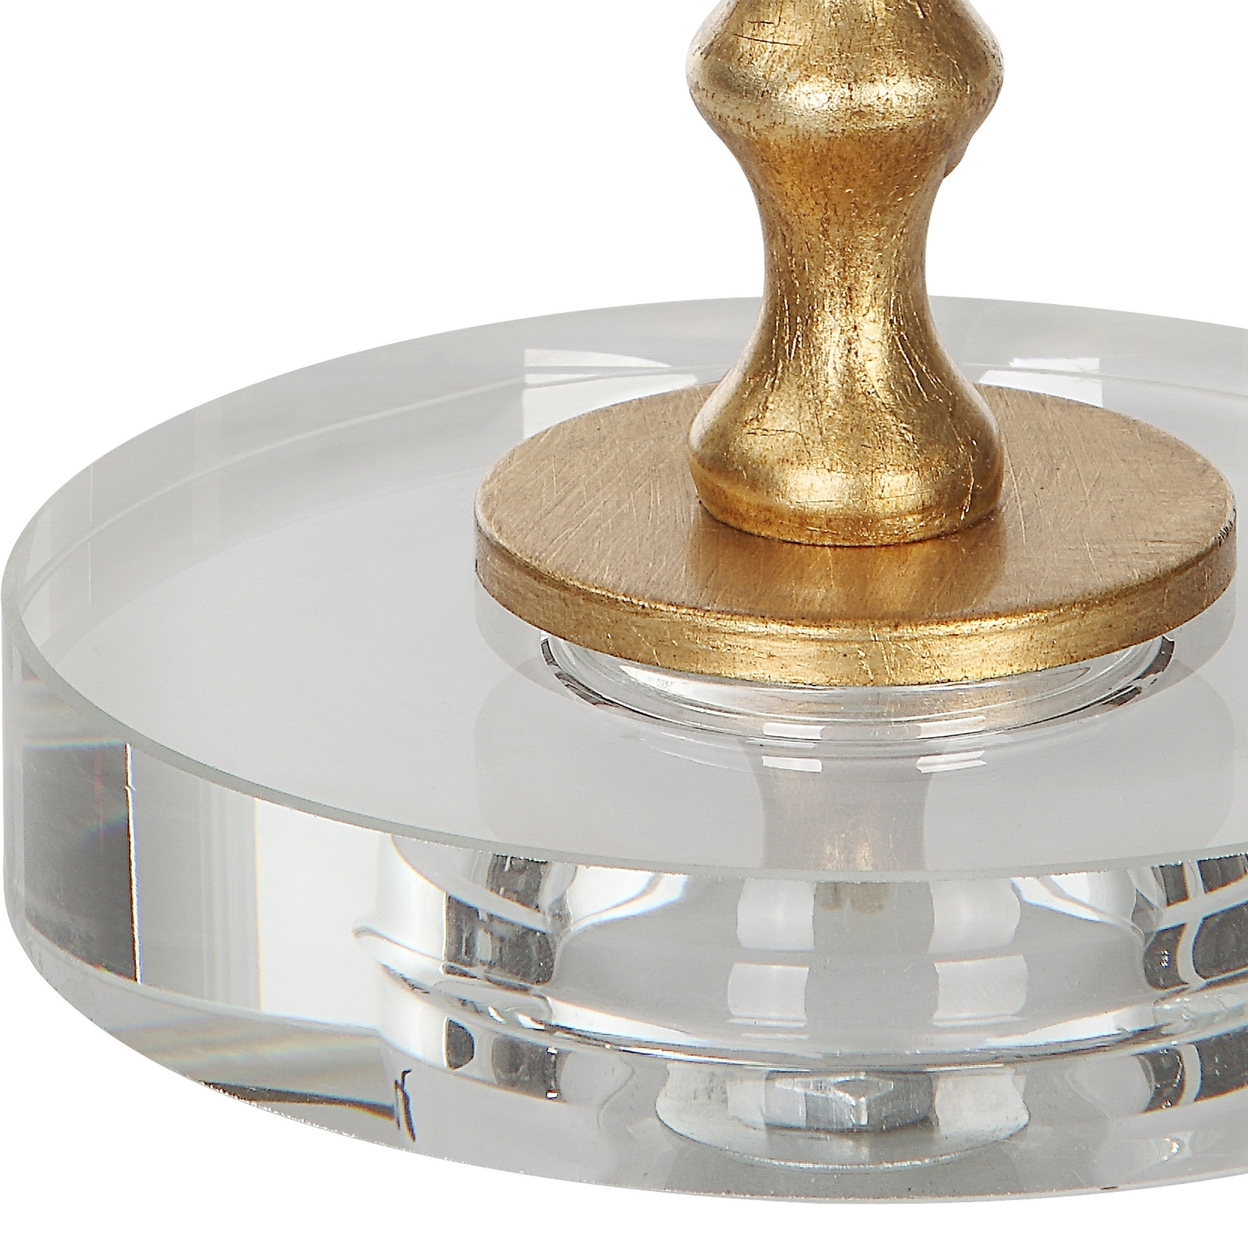 29 Inch Table Lamp, Set Of 2, White Tapered Shade, Gold Leaf, Round Base -Saltoro Sherpi